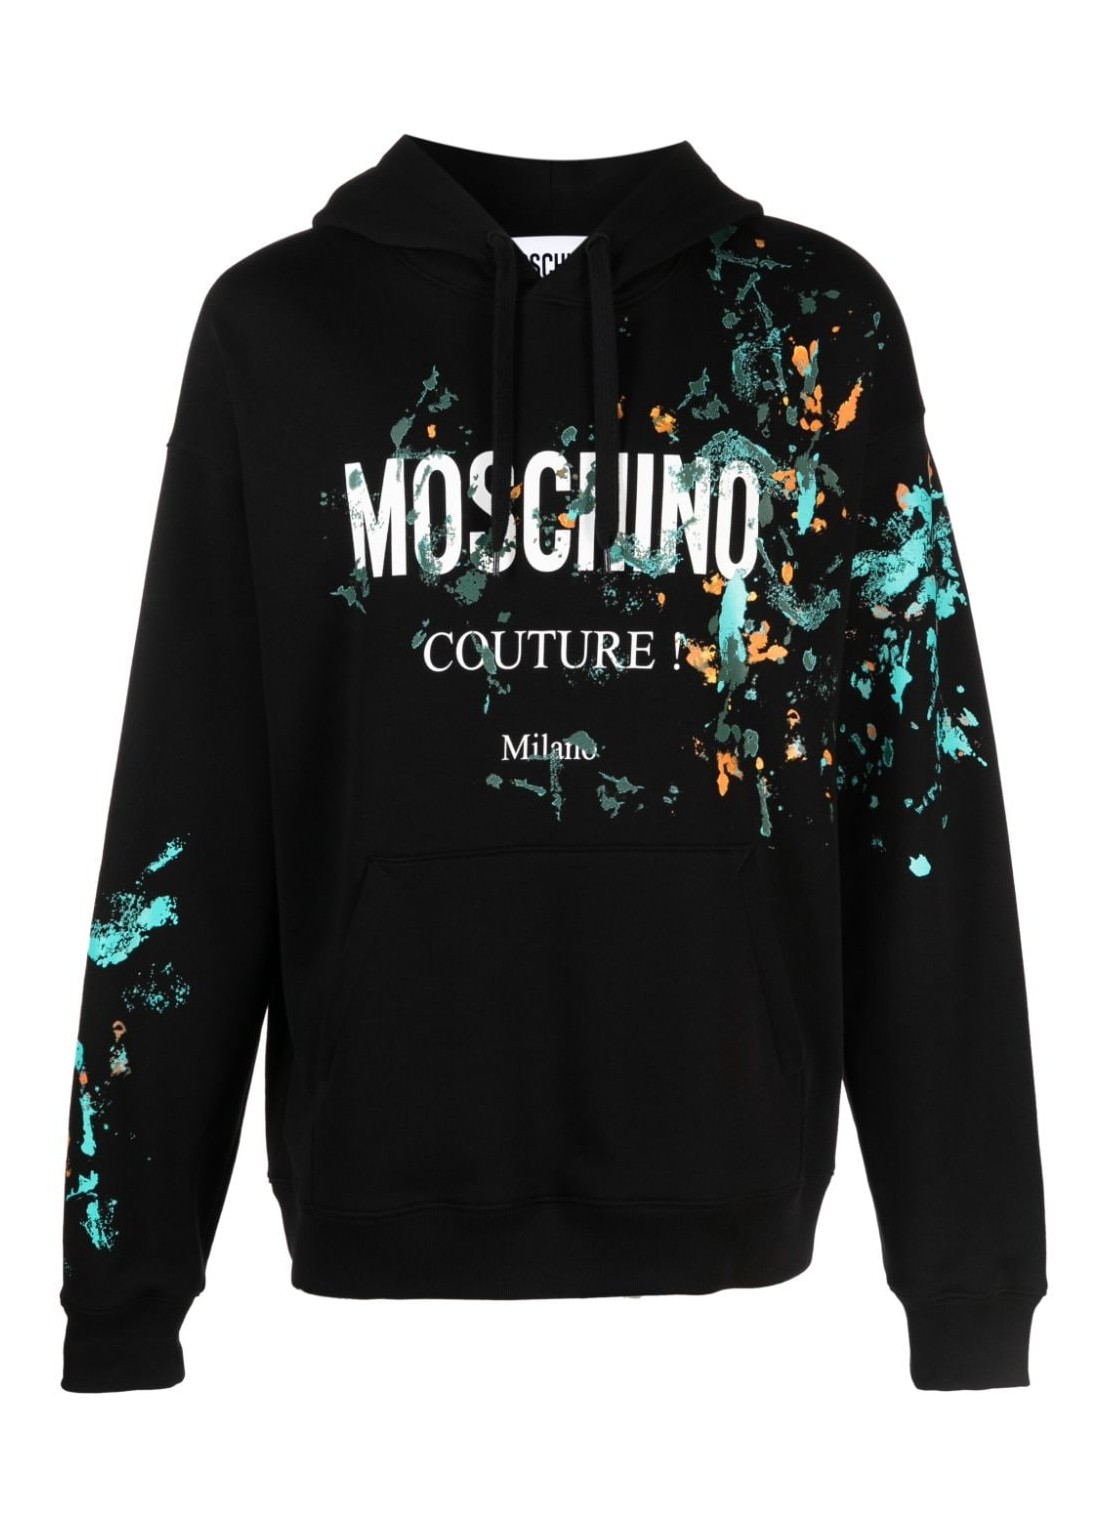 Sudadera moschino couture sweater man sweatshirt 17172028 a1555 talla negro
 